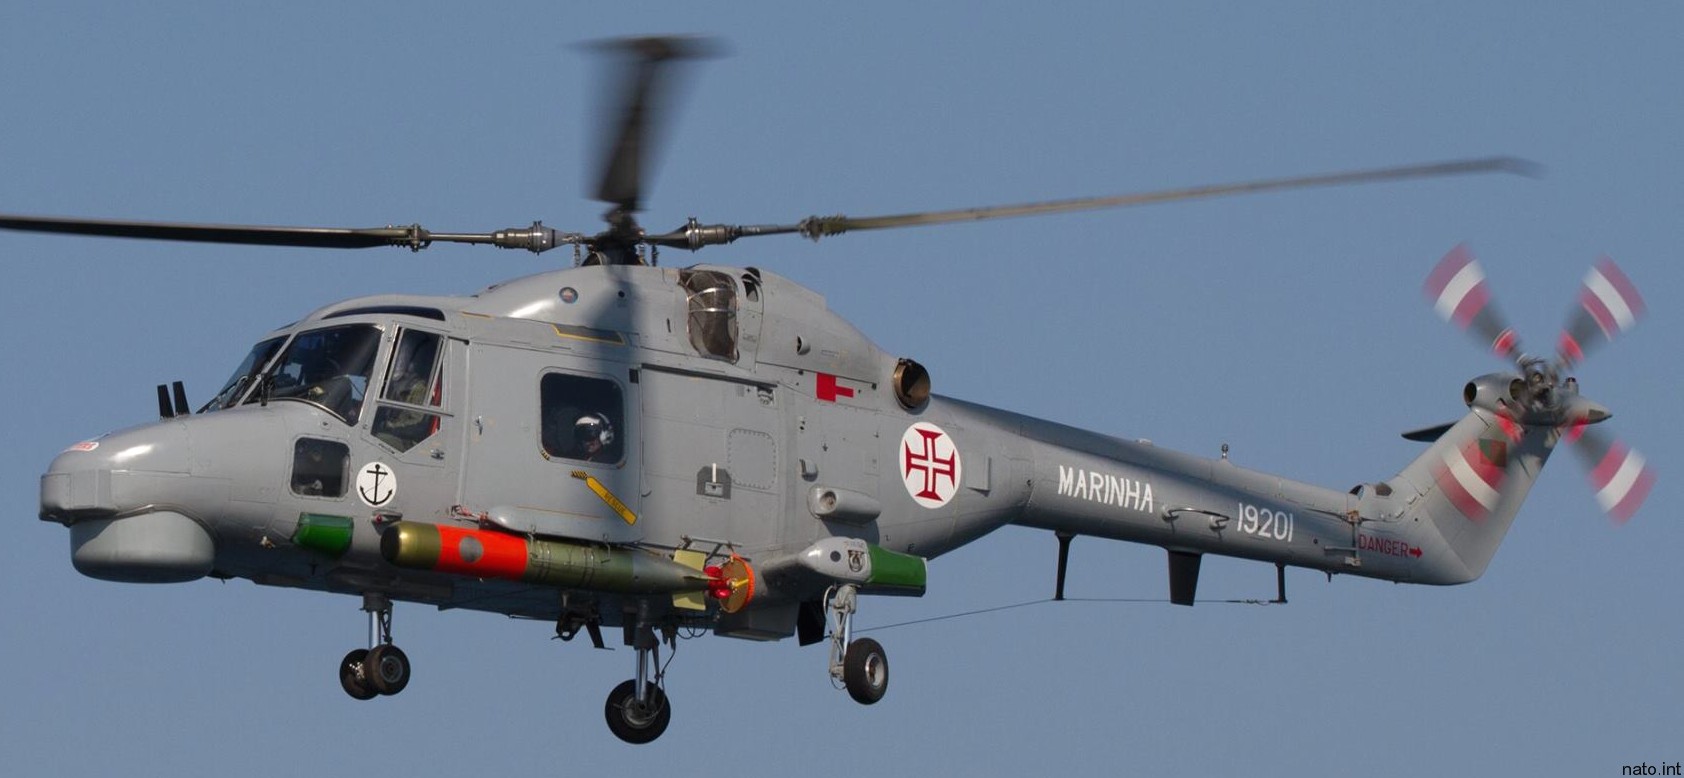 westland super lynx mk.95a naval helicopter portuguese navy marinha frigate montijo air base 17x